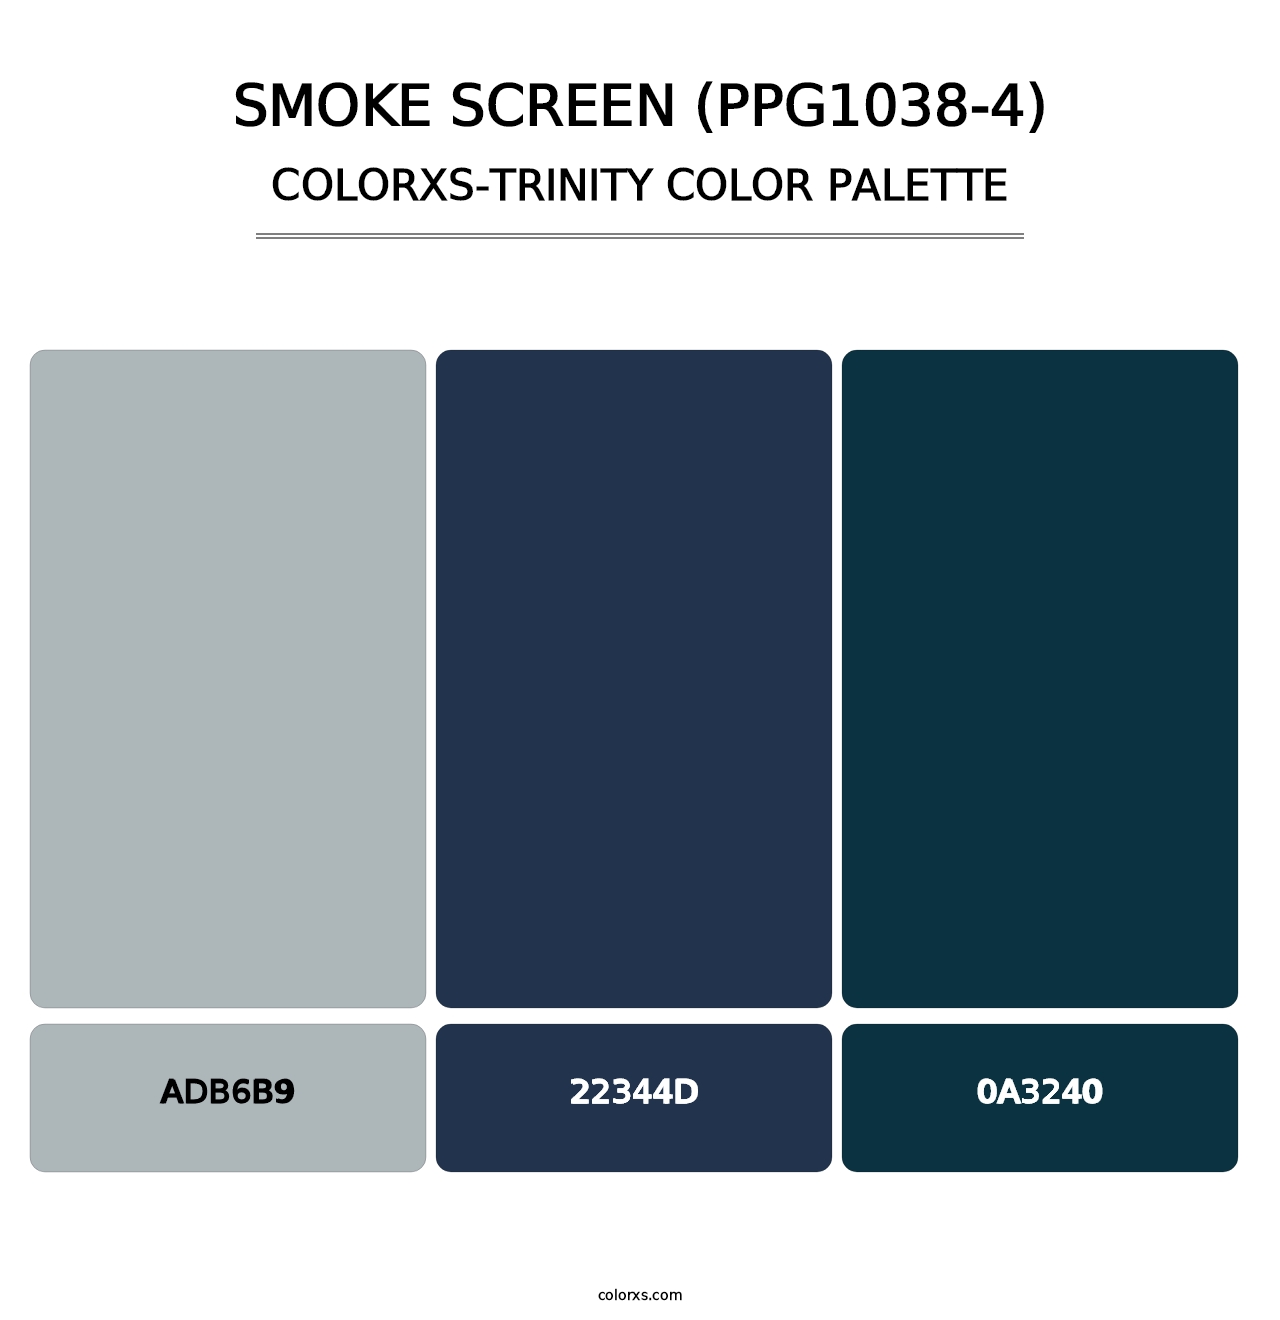 Smoke Screen (PPG1038-4) - Colorxs Trinity Palette